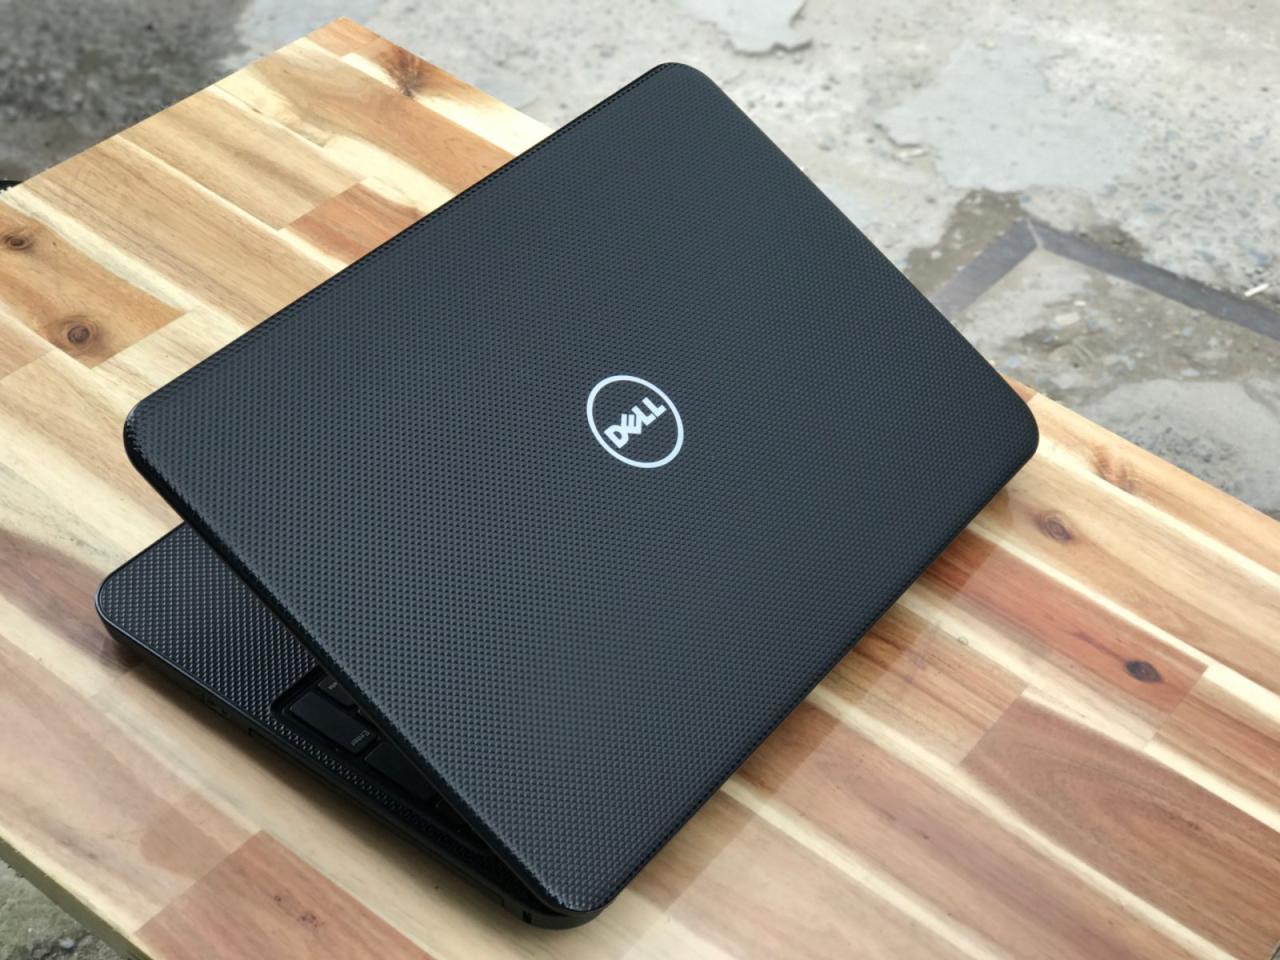 Laptop Dell Inspiron 3537, I5 4200U 4G 500G Like New Zin 100% Giá Rẻ